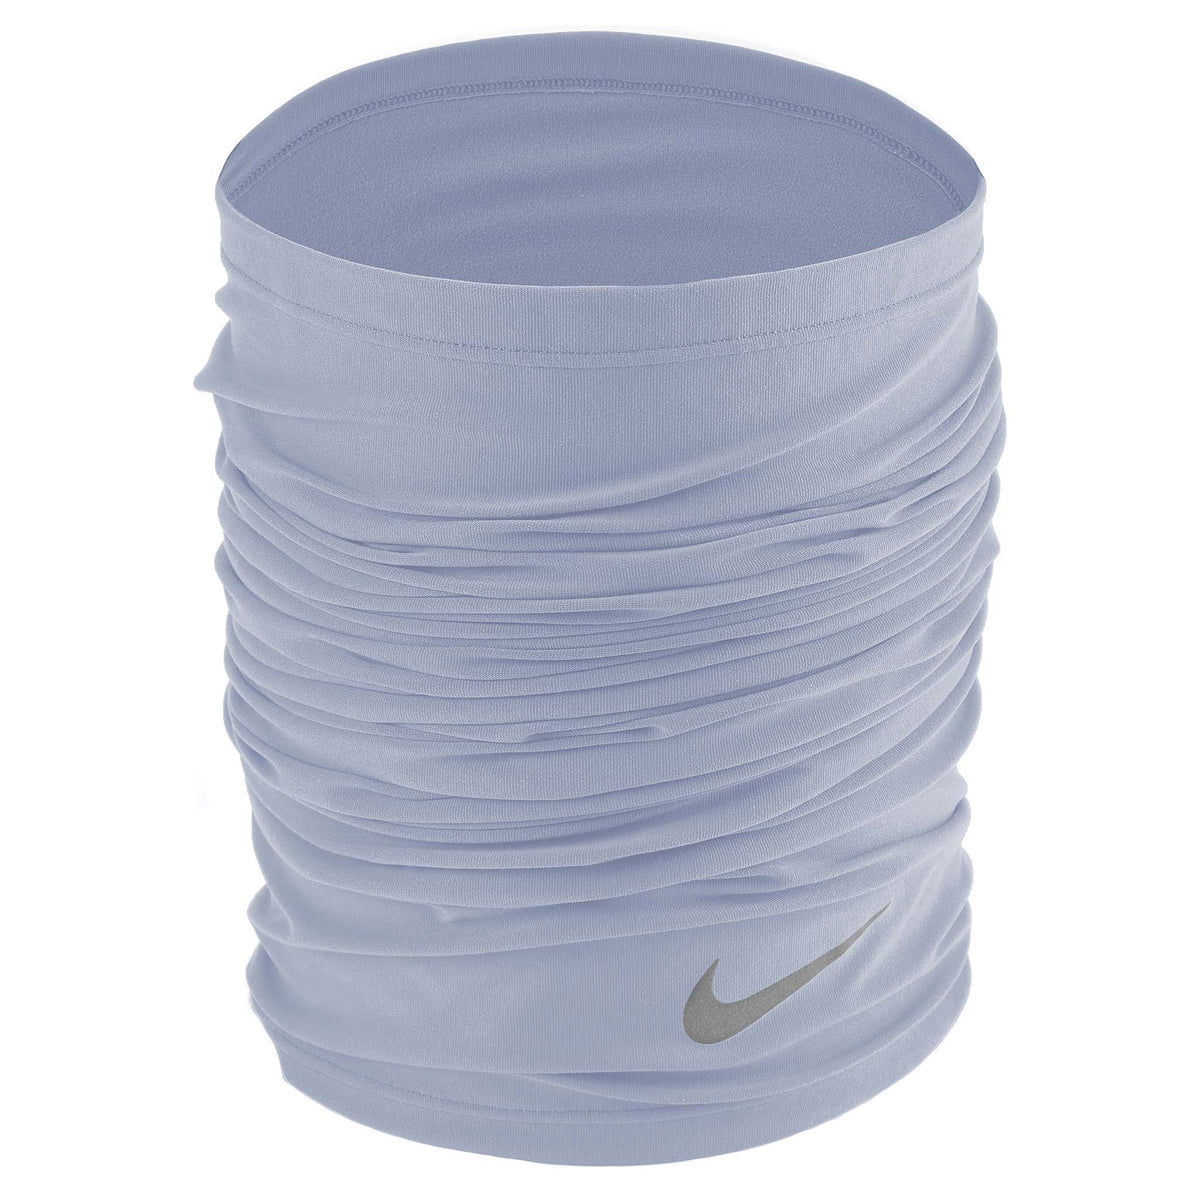 Nike Therma Fit Wrap 2.0 cache-cou de course à piedNike Therma Fit Wrap 2.0 cache-cou de course à pied football grey silver